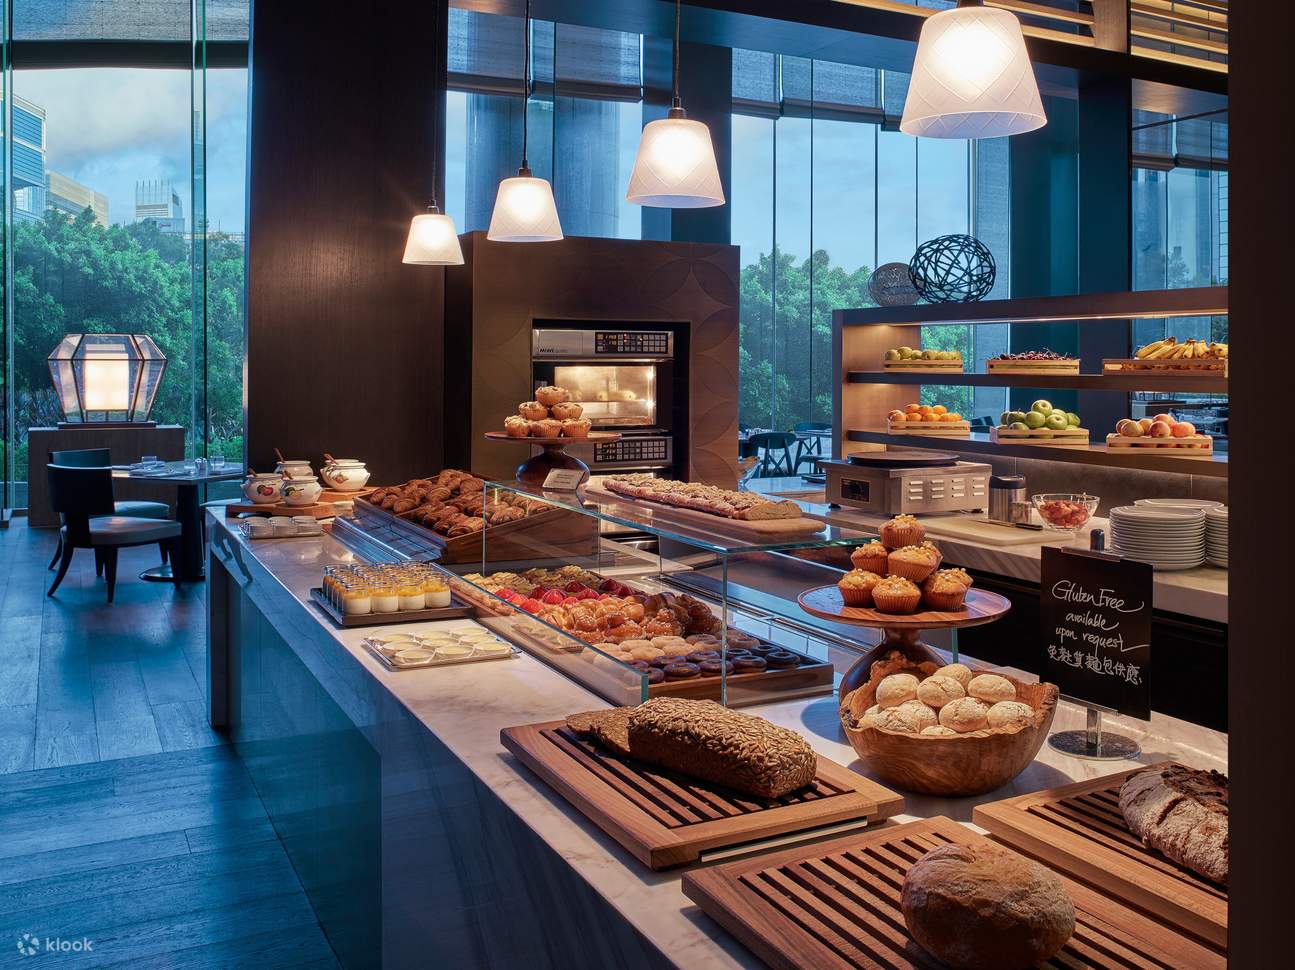 Grand Café Breakfast Buffet - Pastry Station